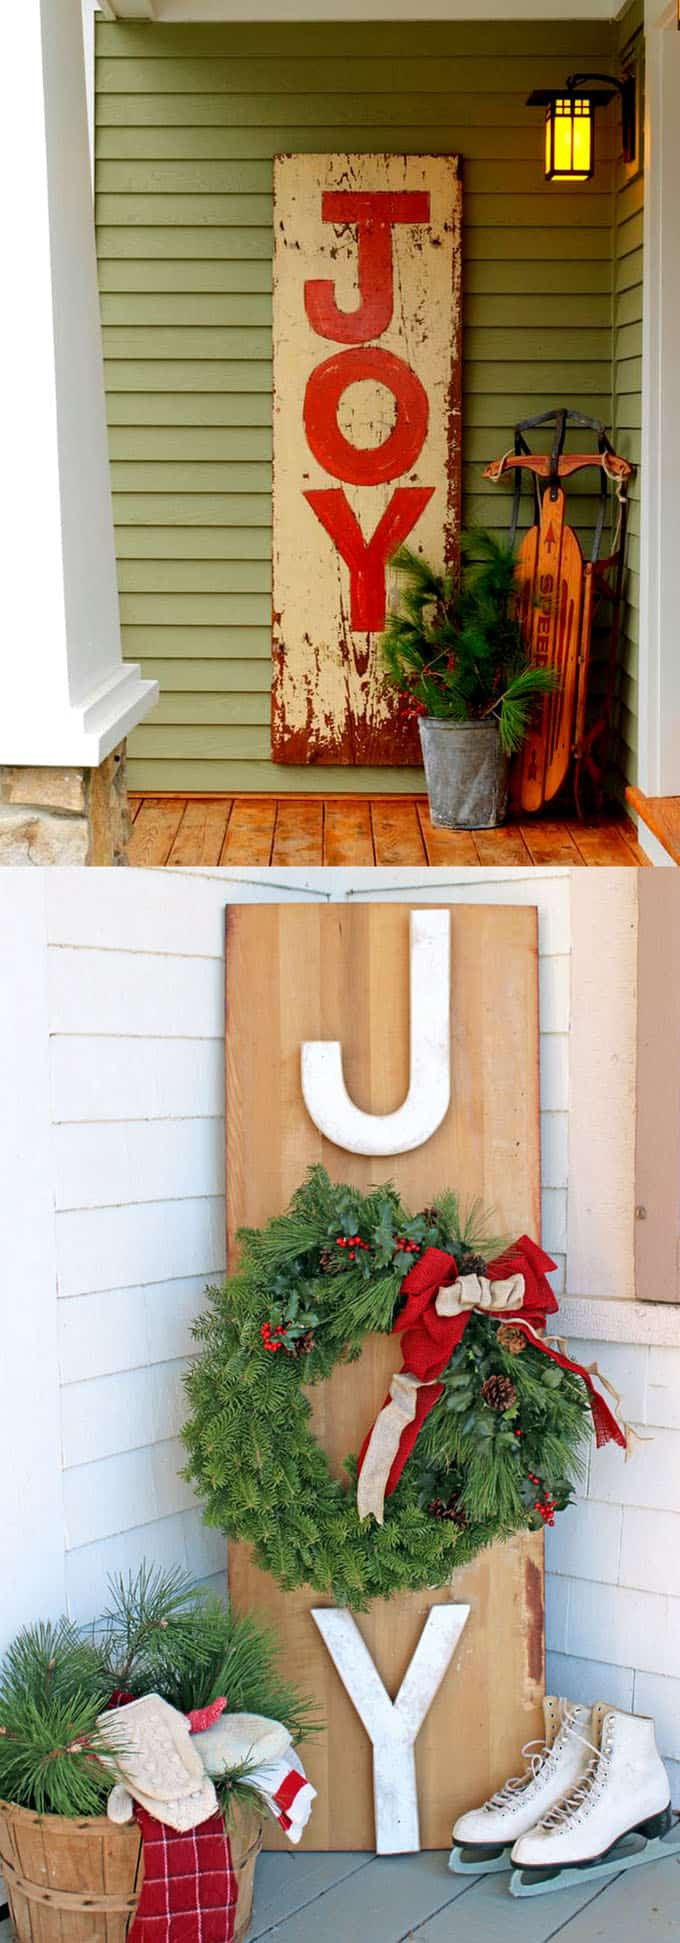 Best ideas about DIY Outdoor Christmas Decorations
. Save or Pin Gorgeous Outdoor Christmas Decorations 32 Best Ideas Now.